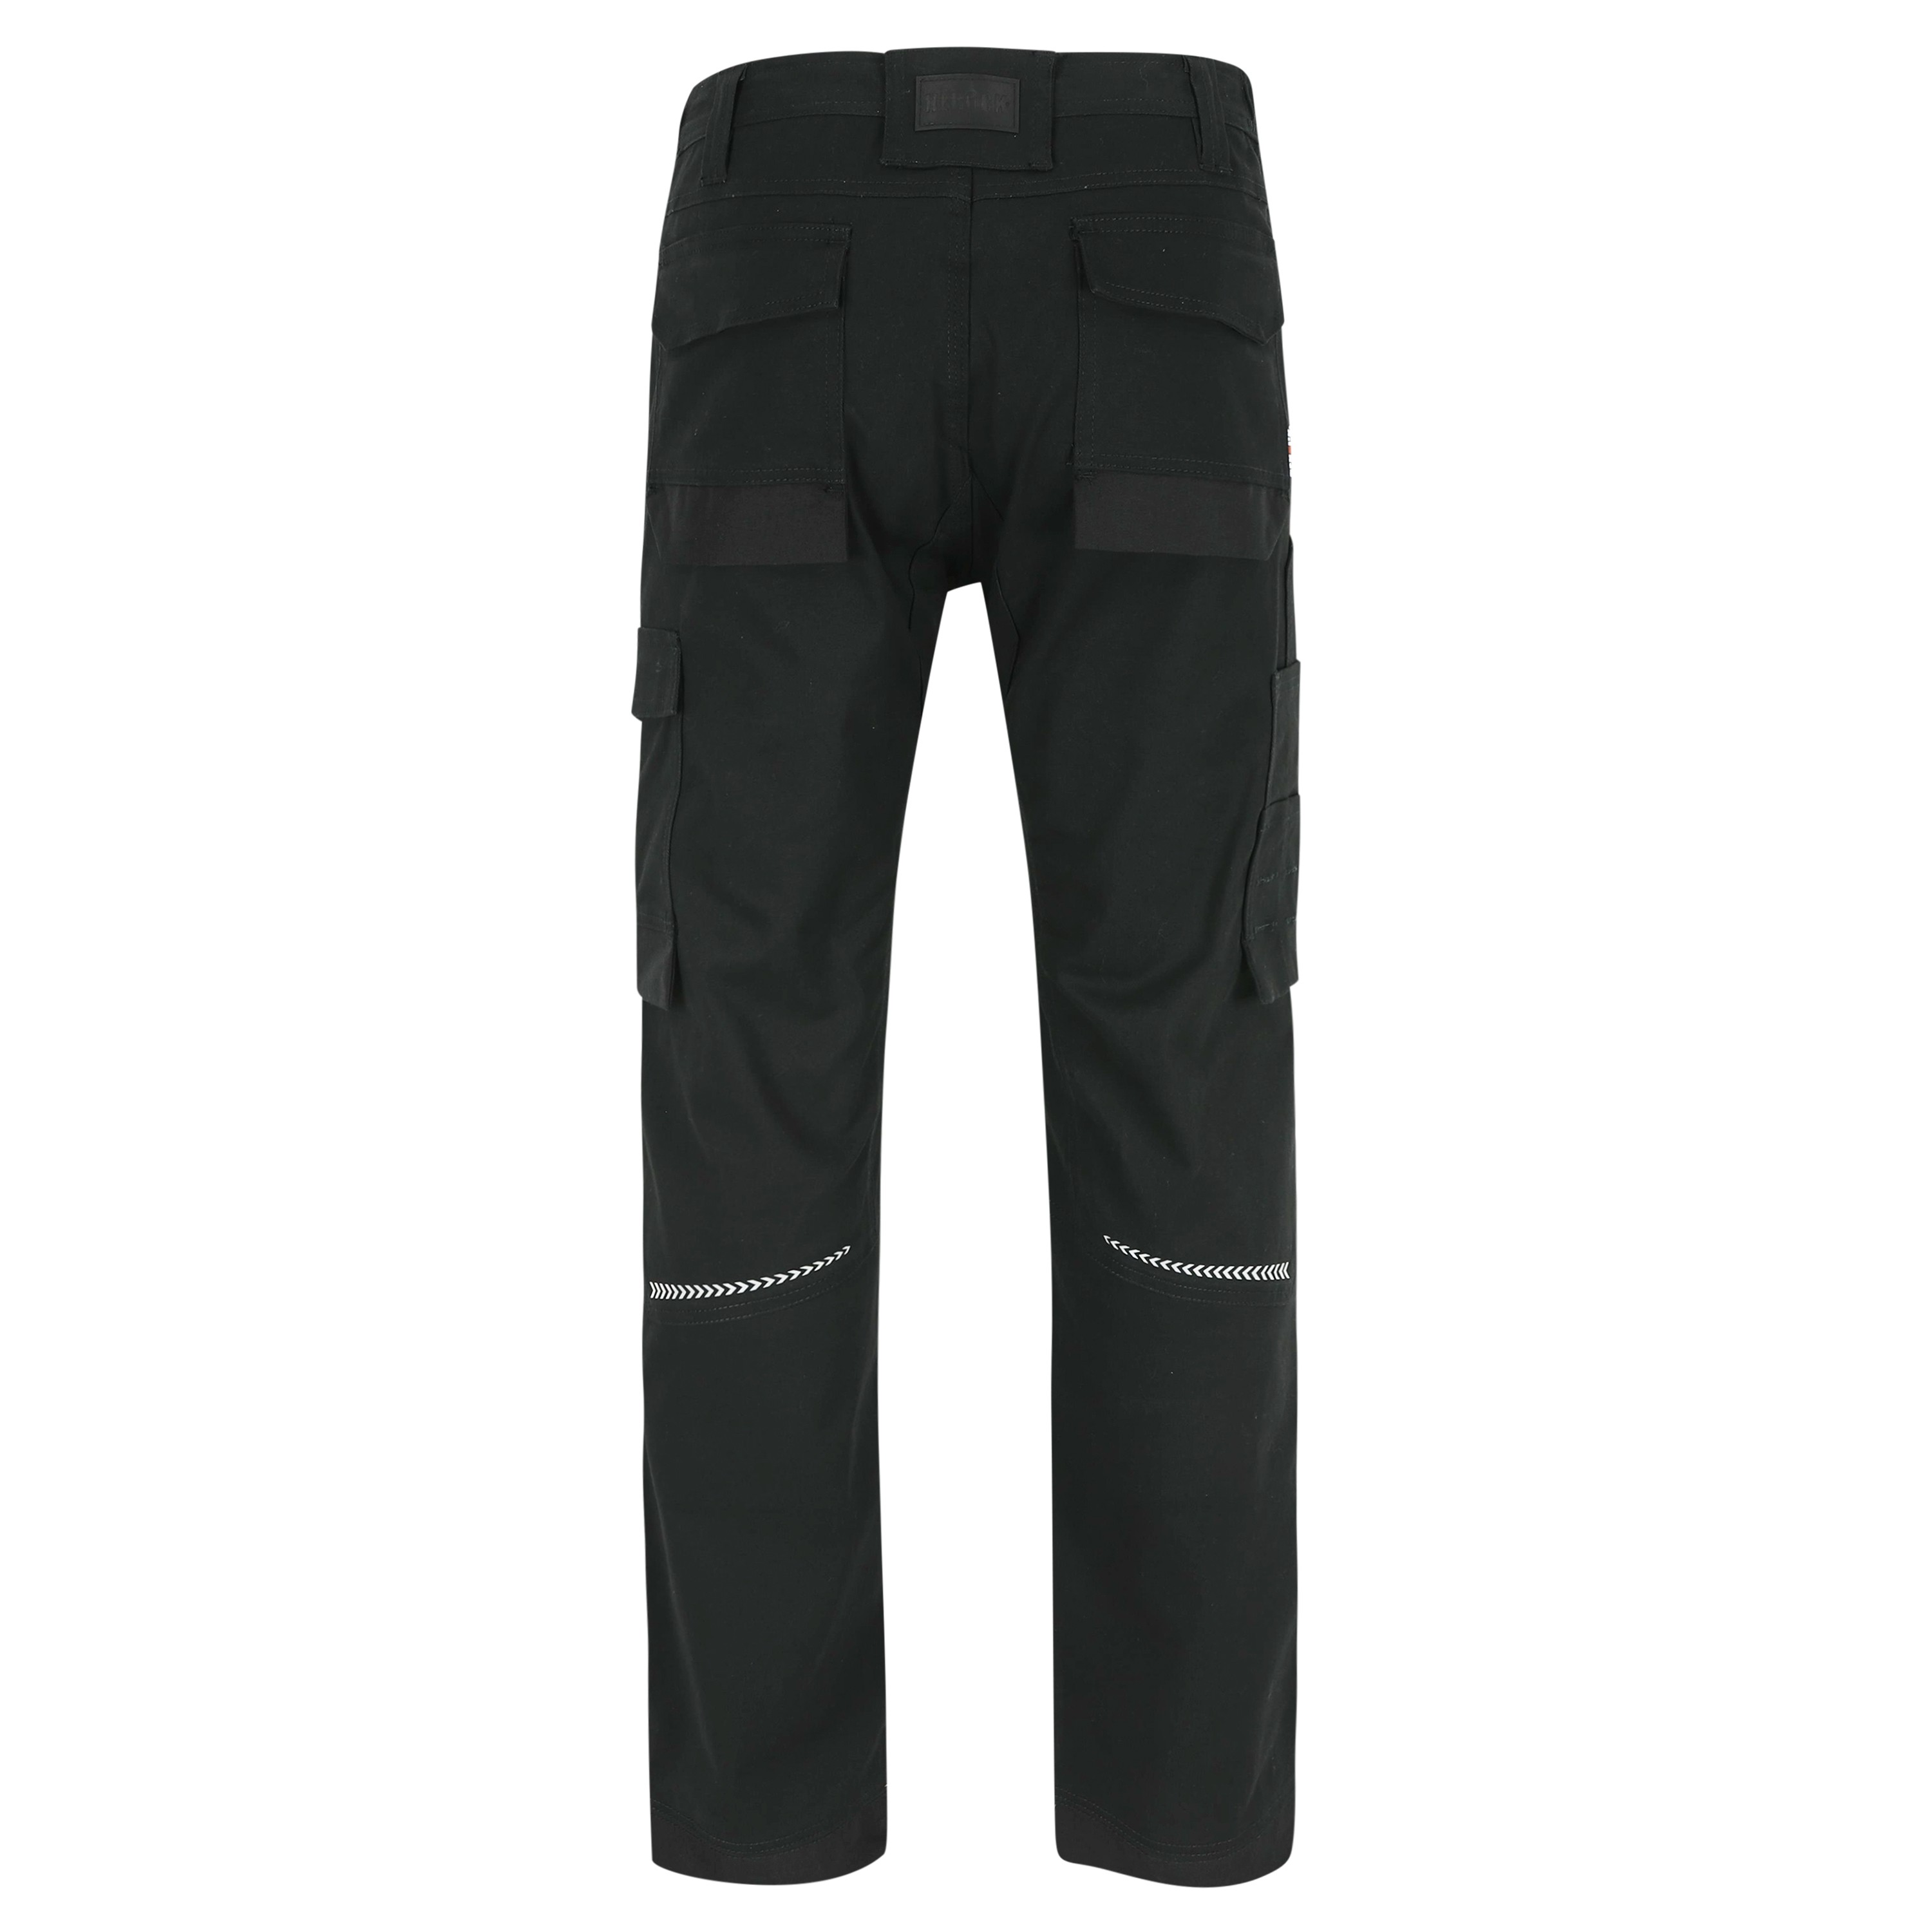 Pantalon travail coton stretch resistant Xeni Herock noir vue 1 cotepro.fr